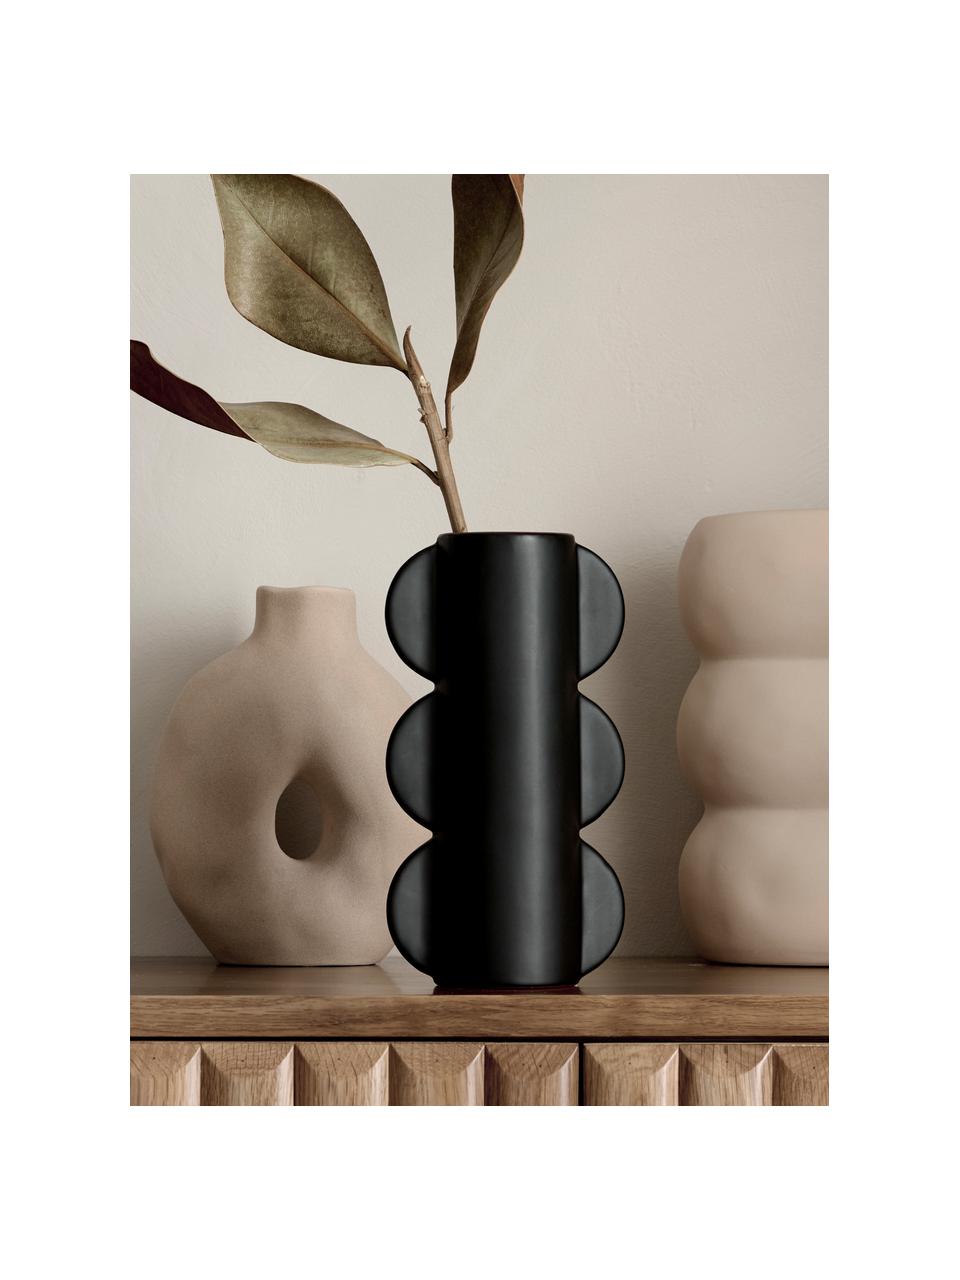 Moderní keramická váza Elephant Ears, Keramika, Černá, Ø 12 cm, V 22 cm